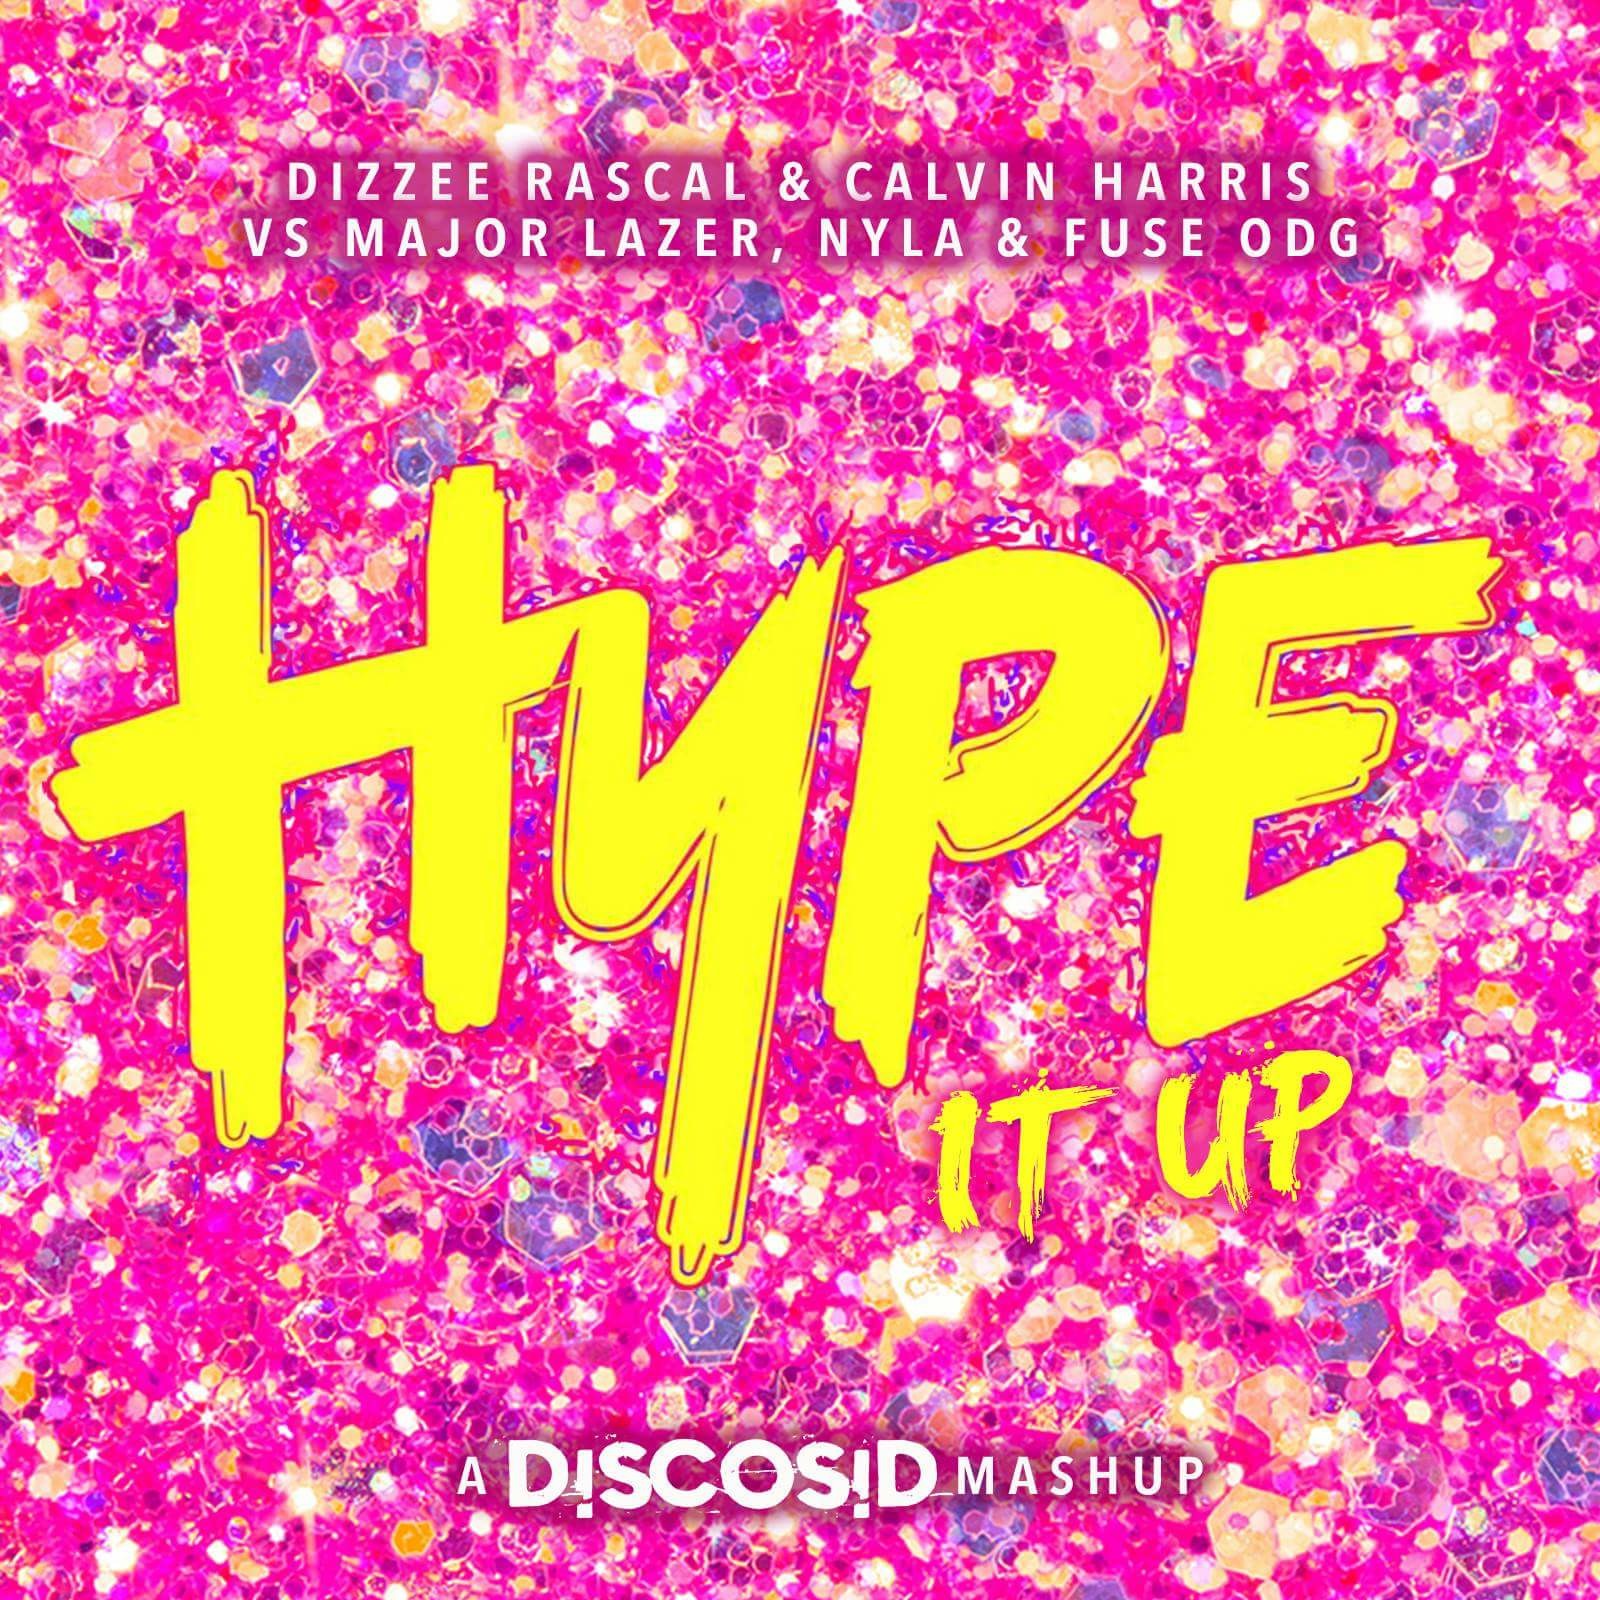 Dizzee Rascal & Calvin Harris Vs Major Lazer, Nyla & Fuse ODG - Hype It Up (Discosid Mashup)